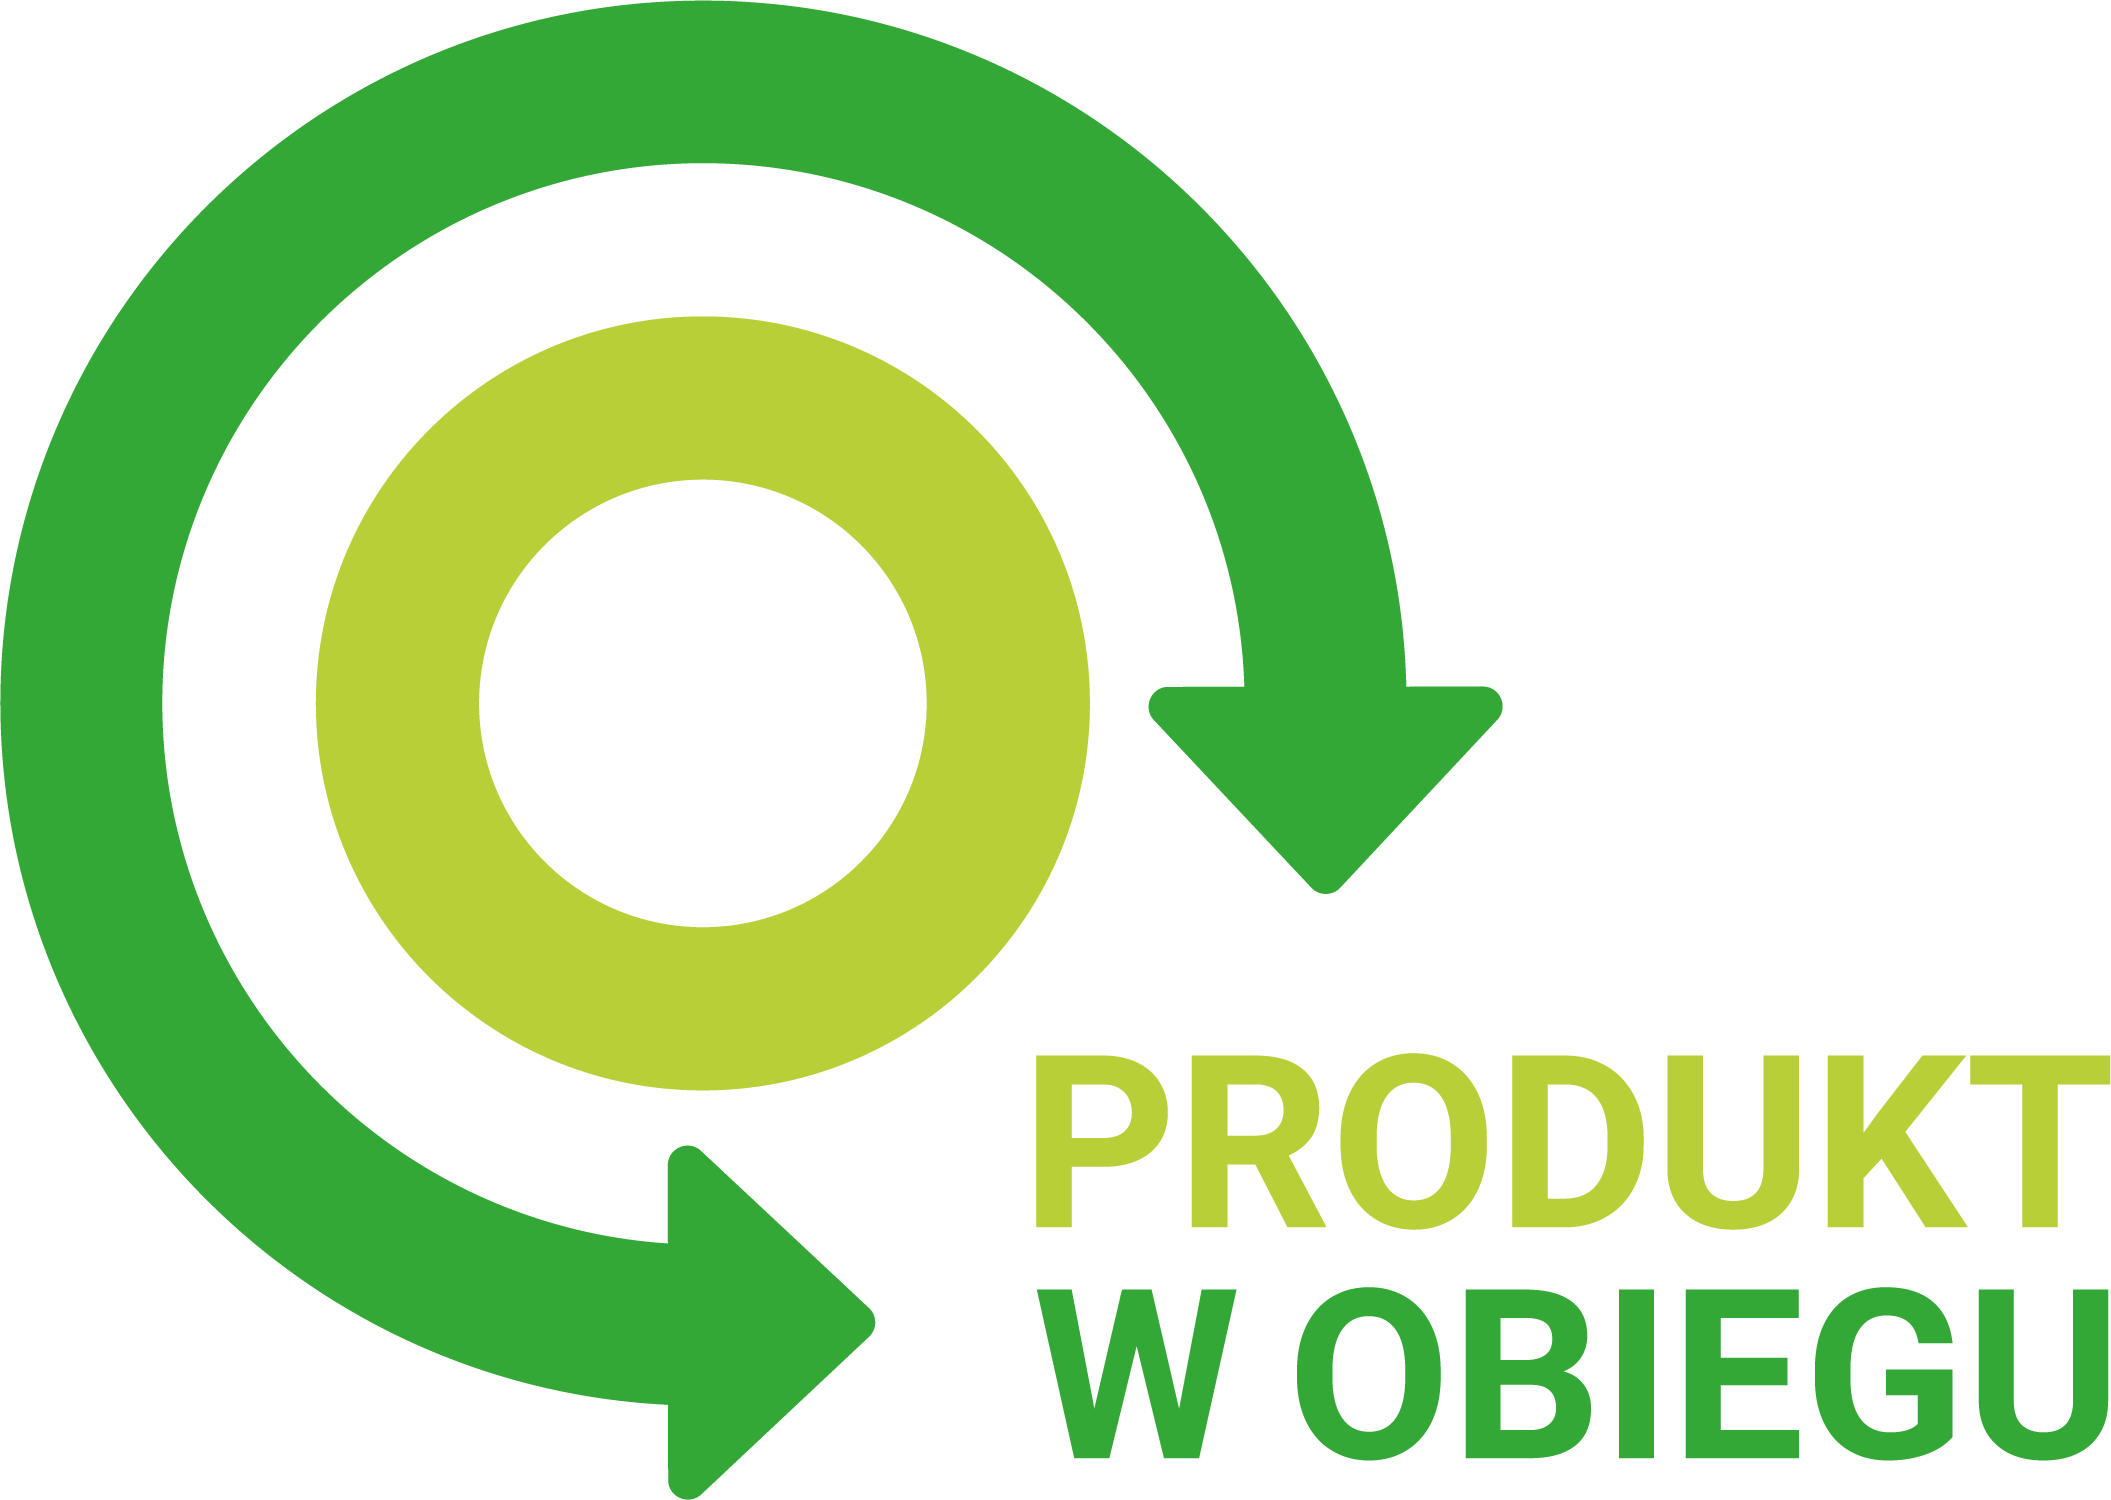 Logo konkursu Produkt w obiegu